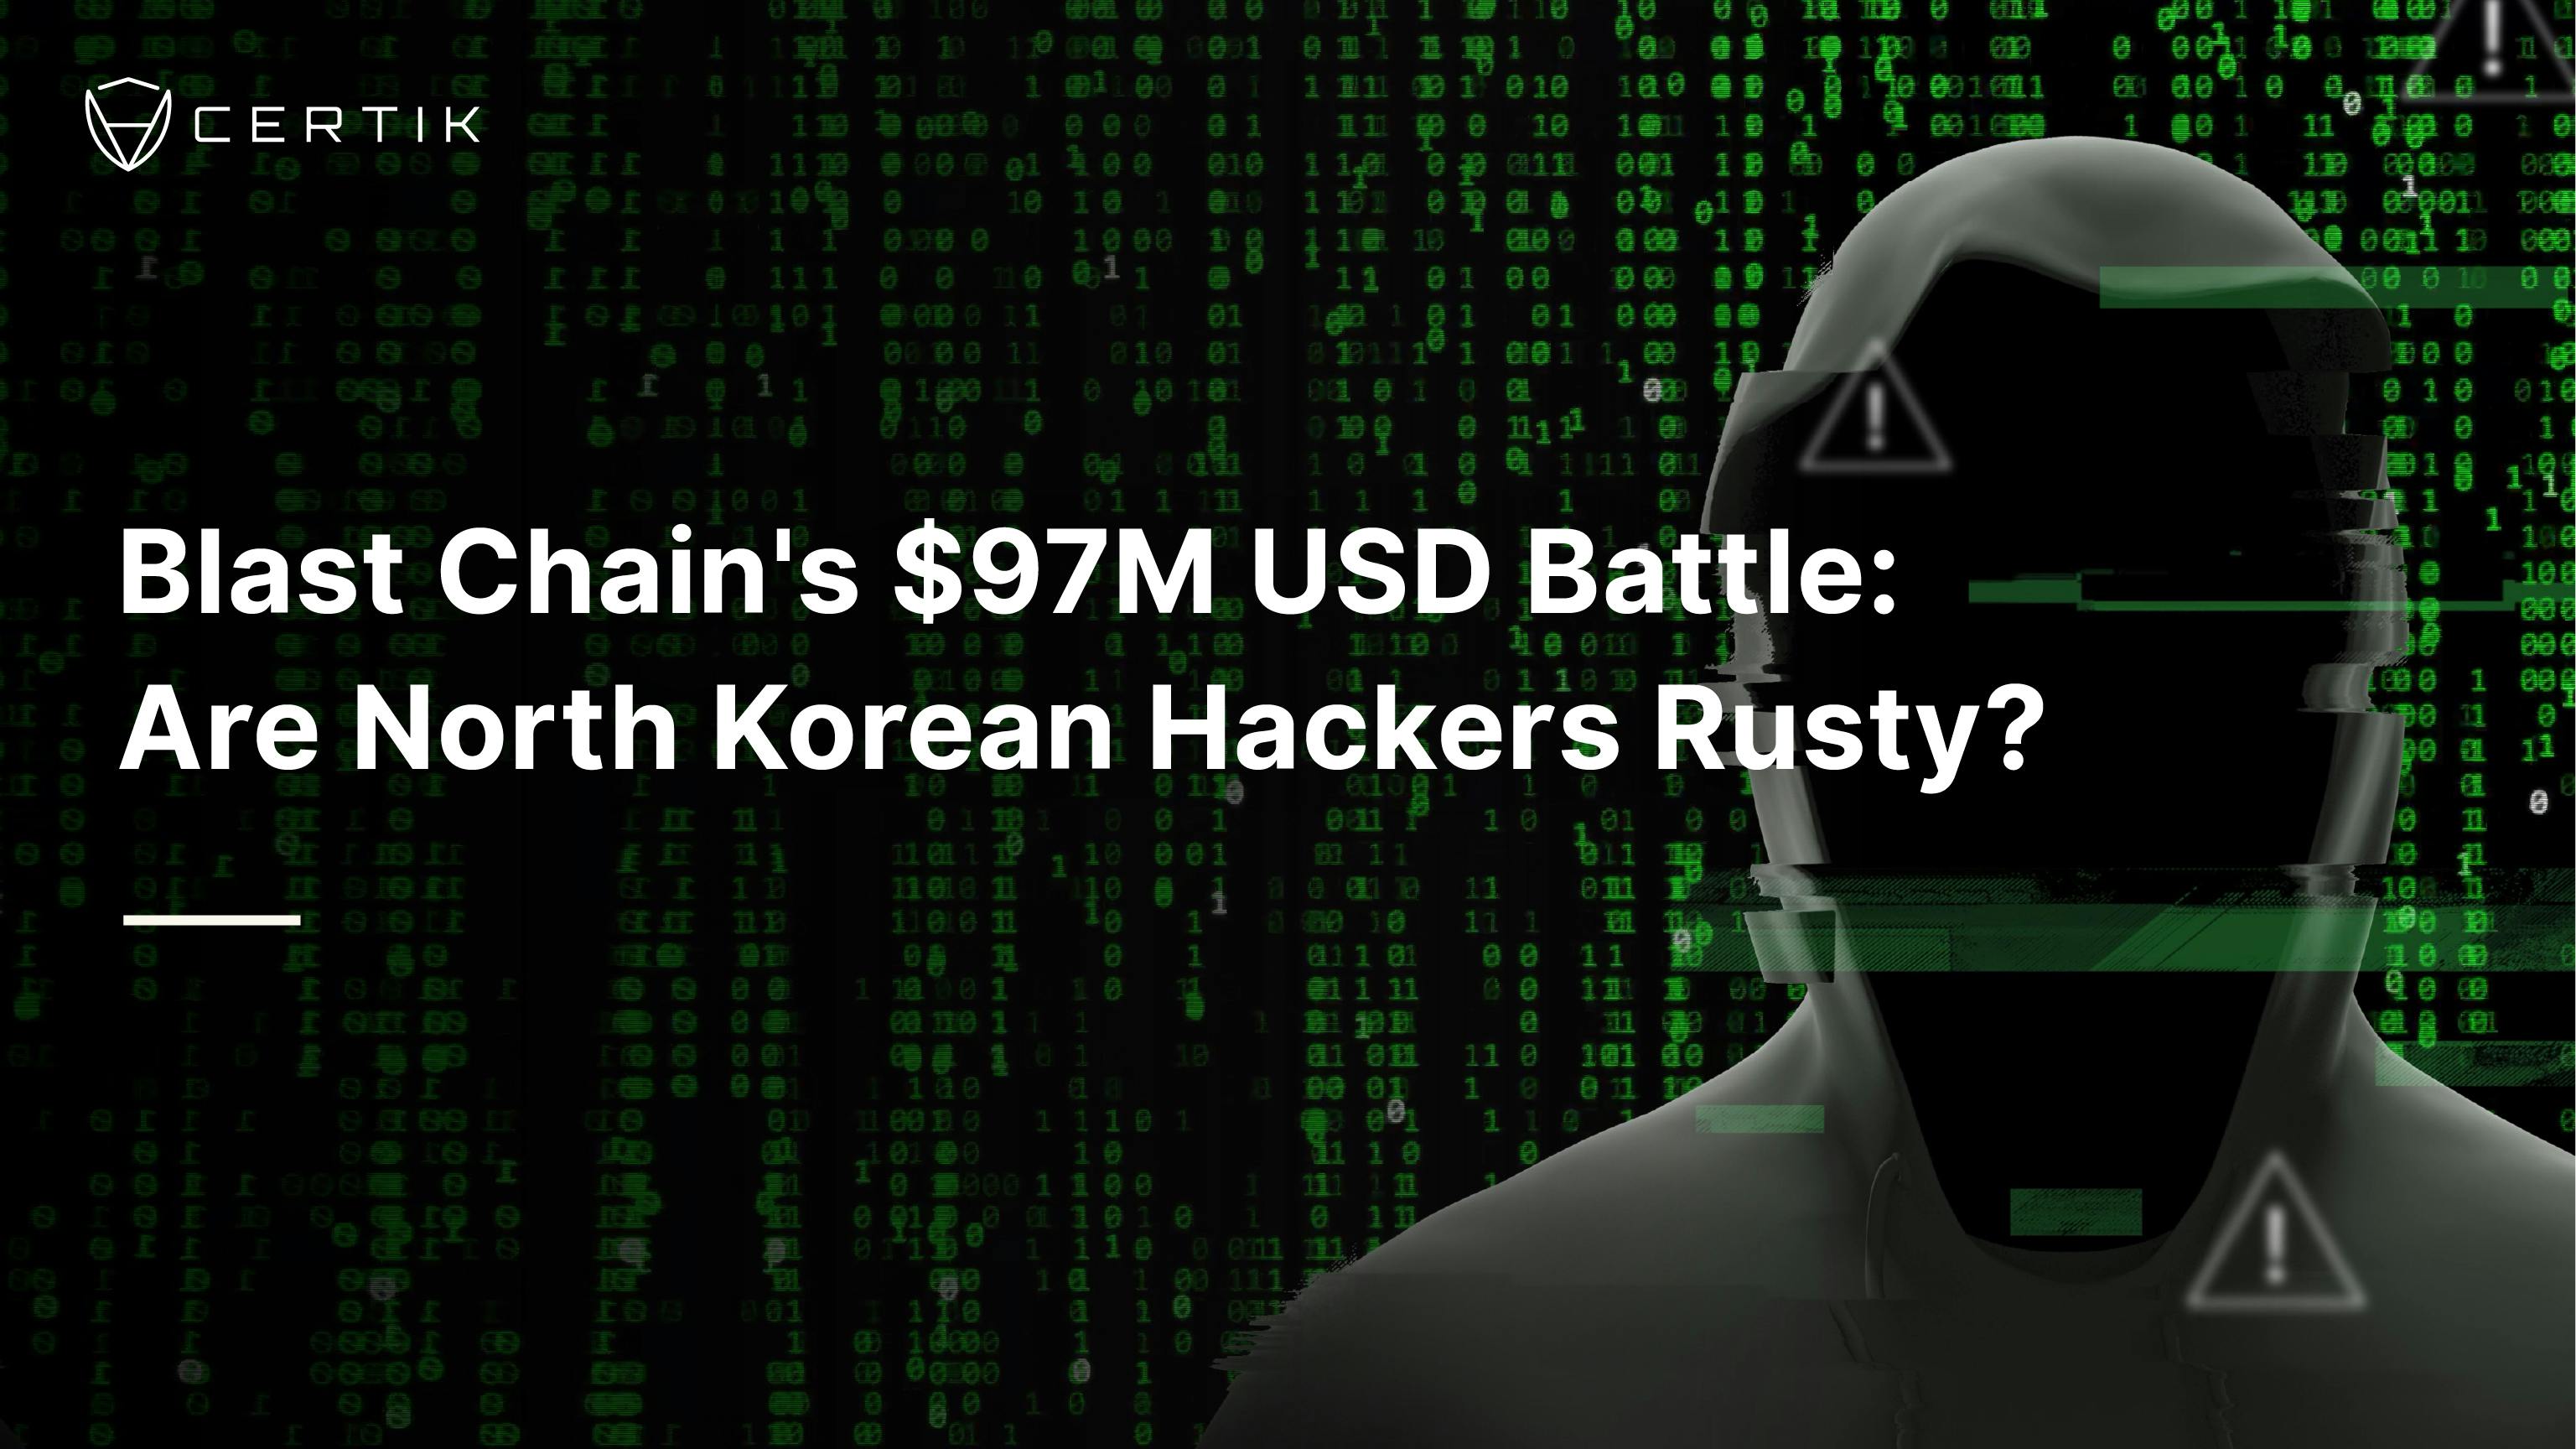 Blast Chain's $97 Million Battle: Are North Korean Hackers Rusty?